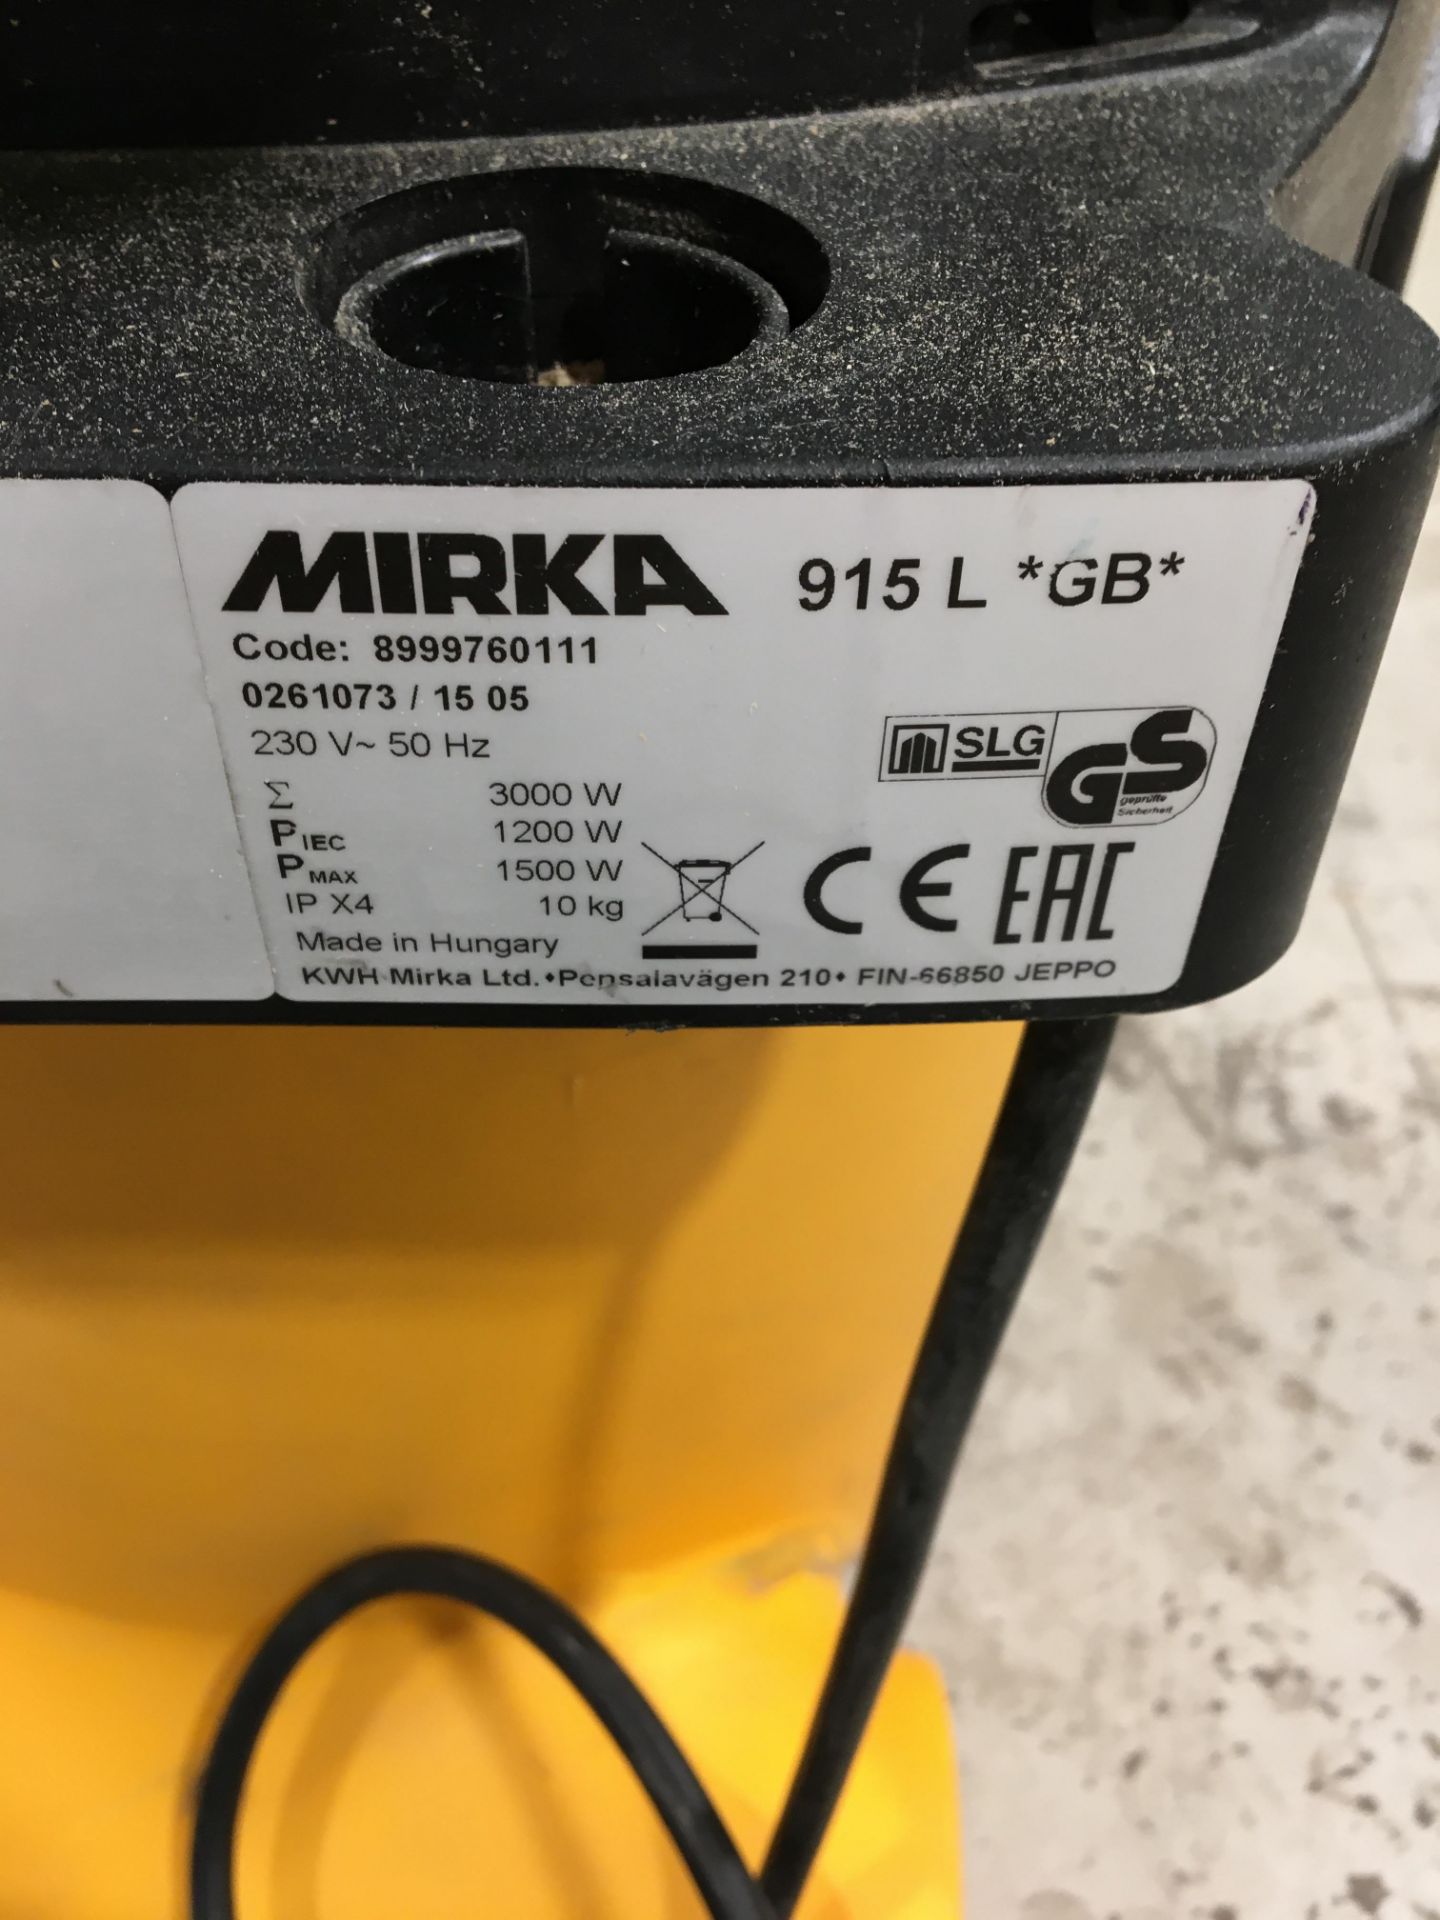 Mirka 915 L *GB* 230v vacuum dust extraction unit, Serial No. 0261073/1505 with flexi hose (No - Image 2 of 3